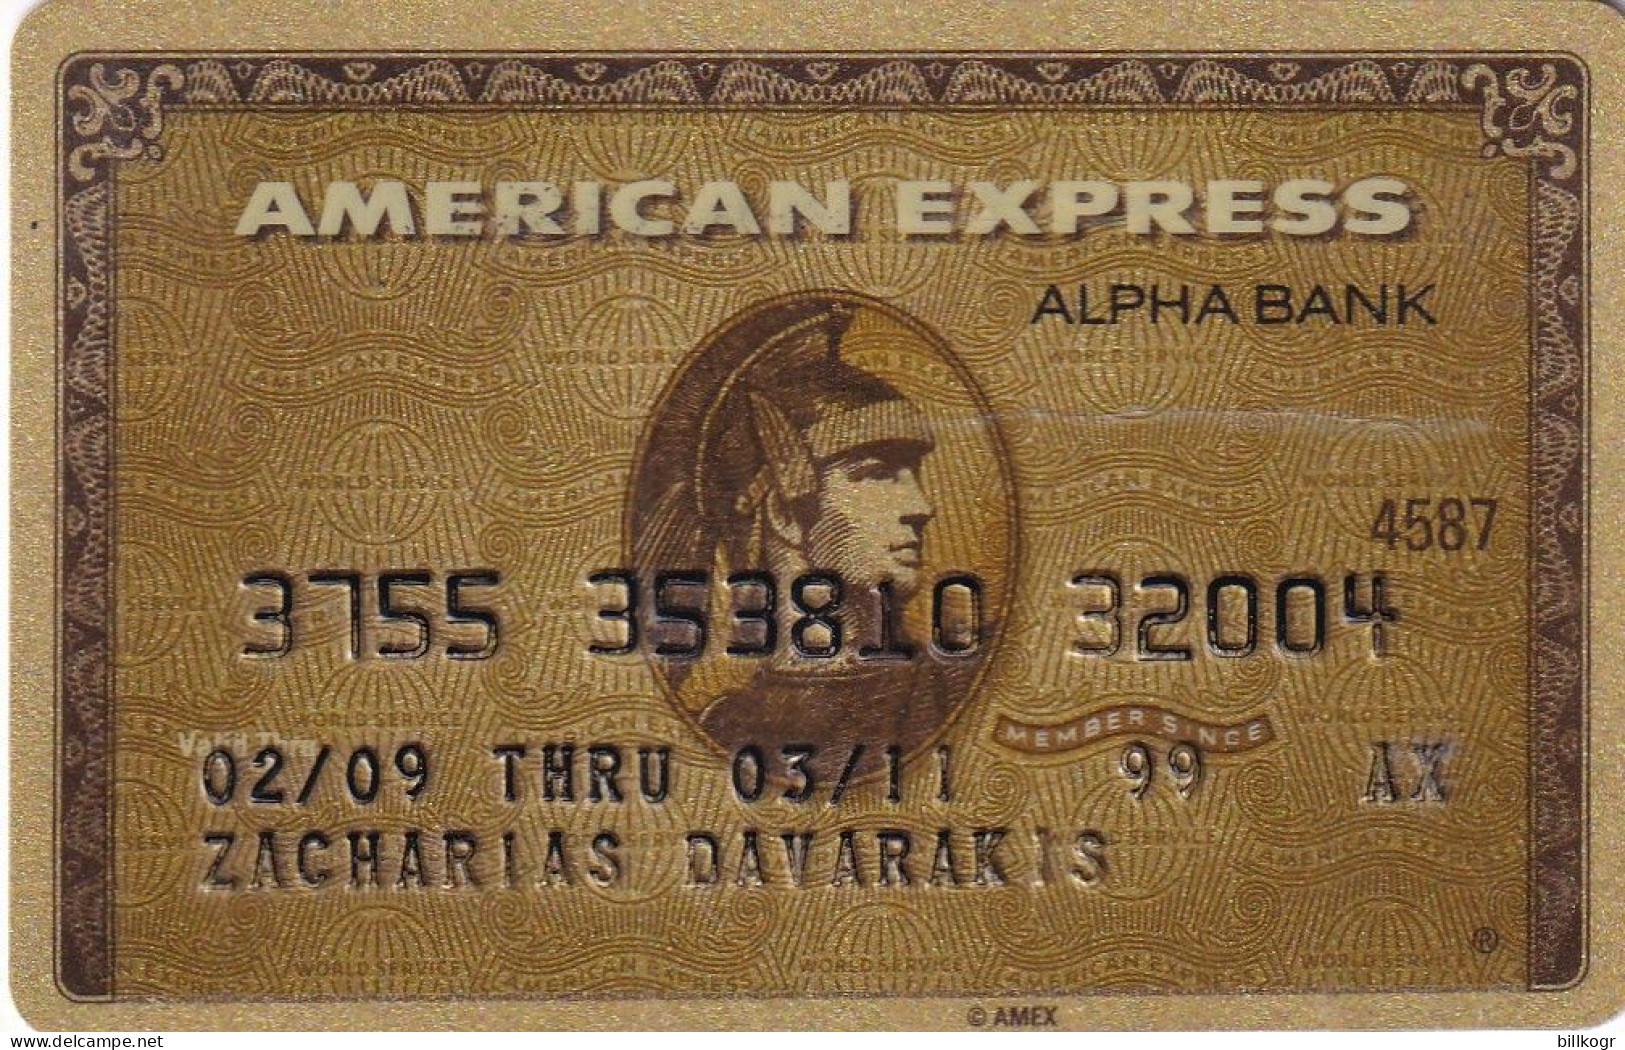 GREECE - Alpha Bank, American Express Gold Card, 10/08, Used - Cartes De Crédit (expiration Min. 10 Ans)